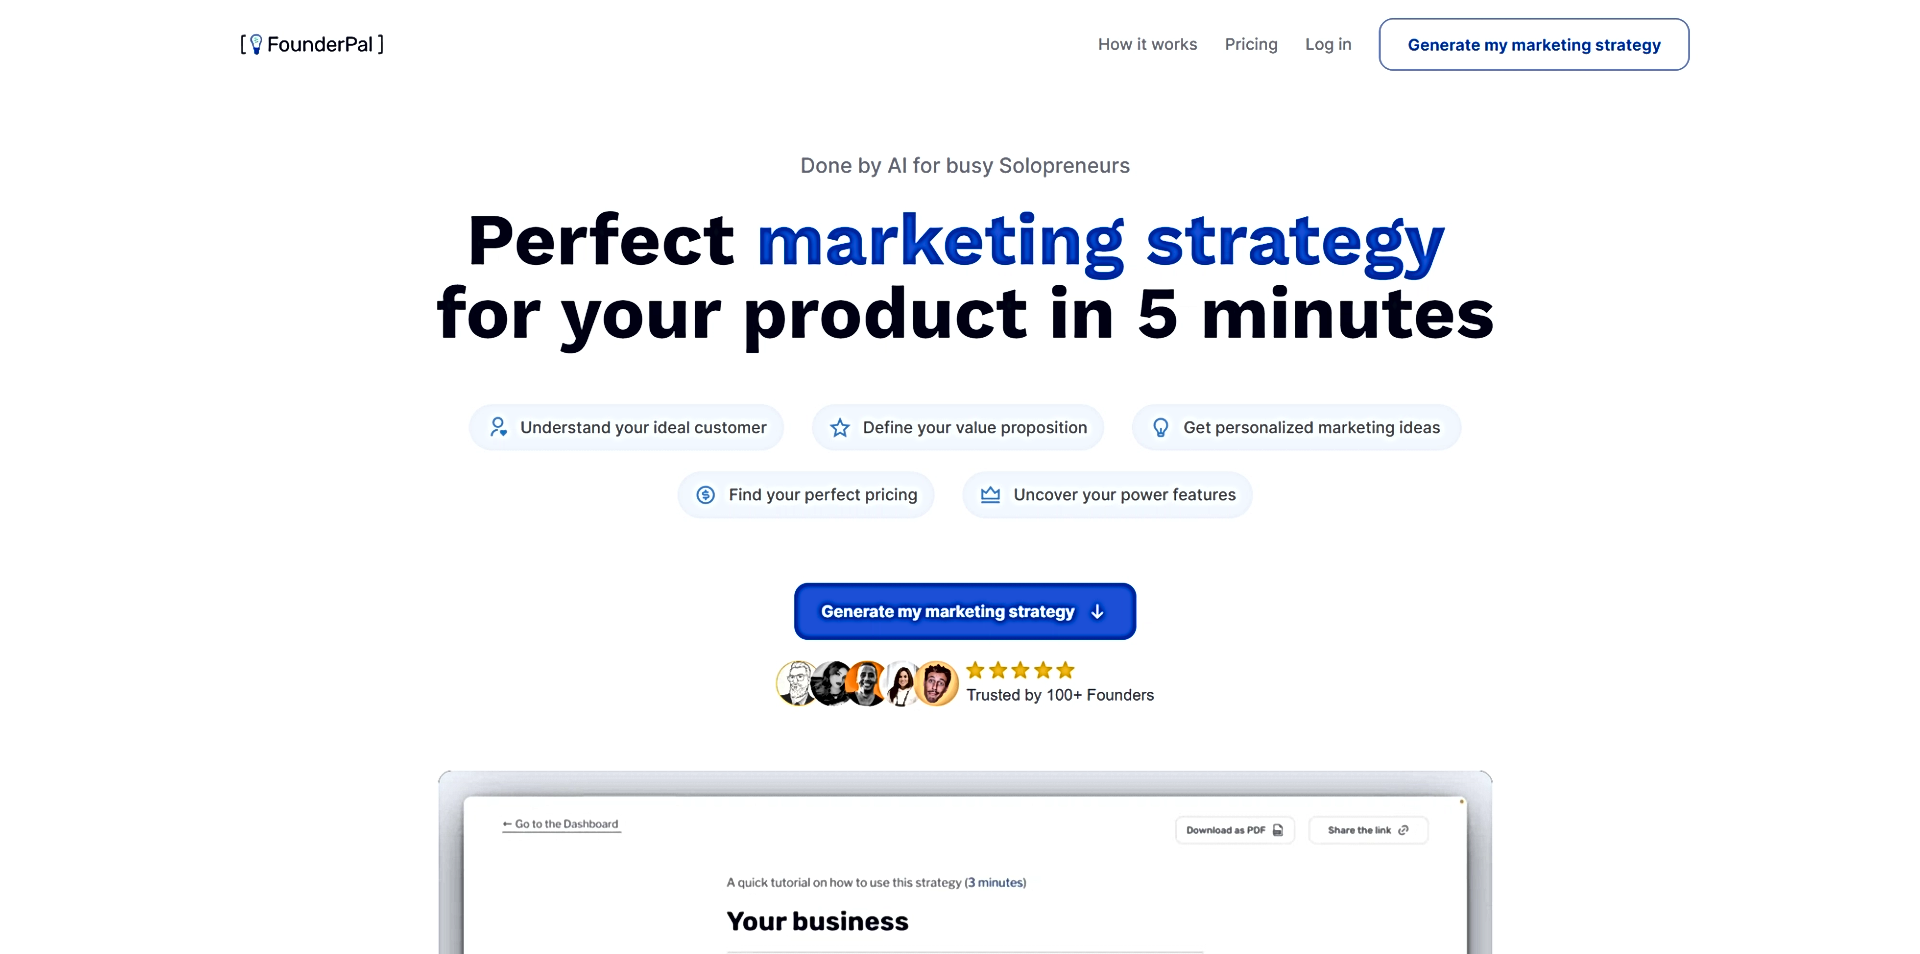 Marketing Strategy Generator featured